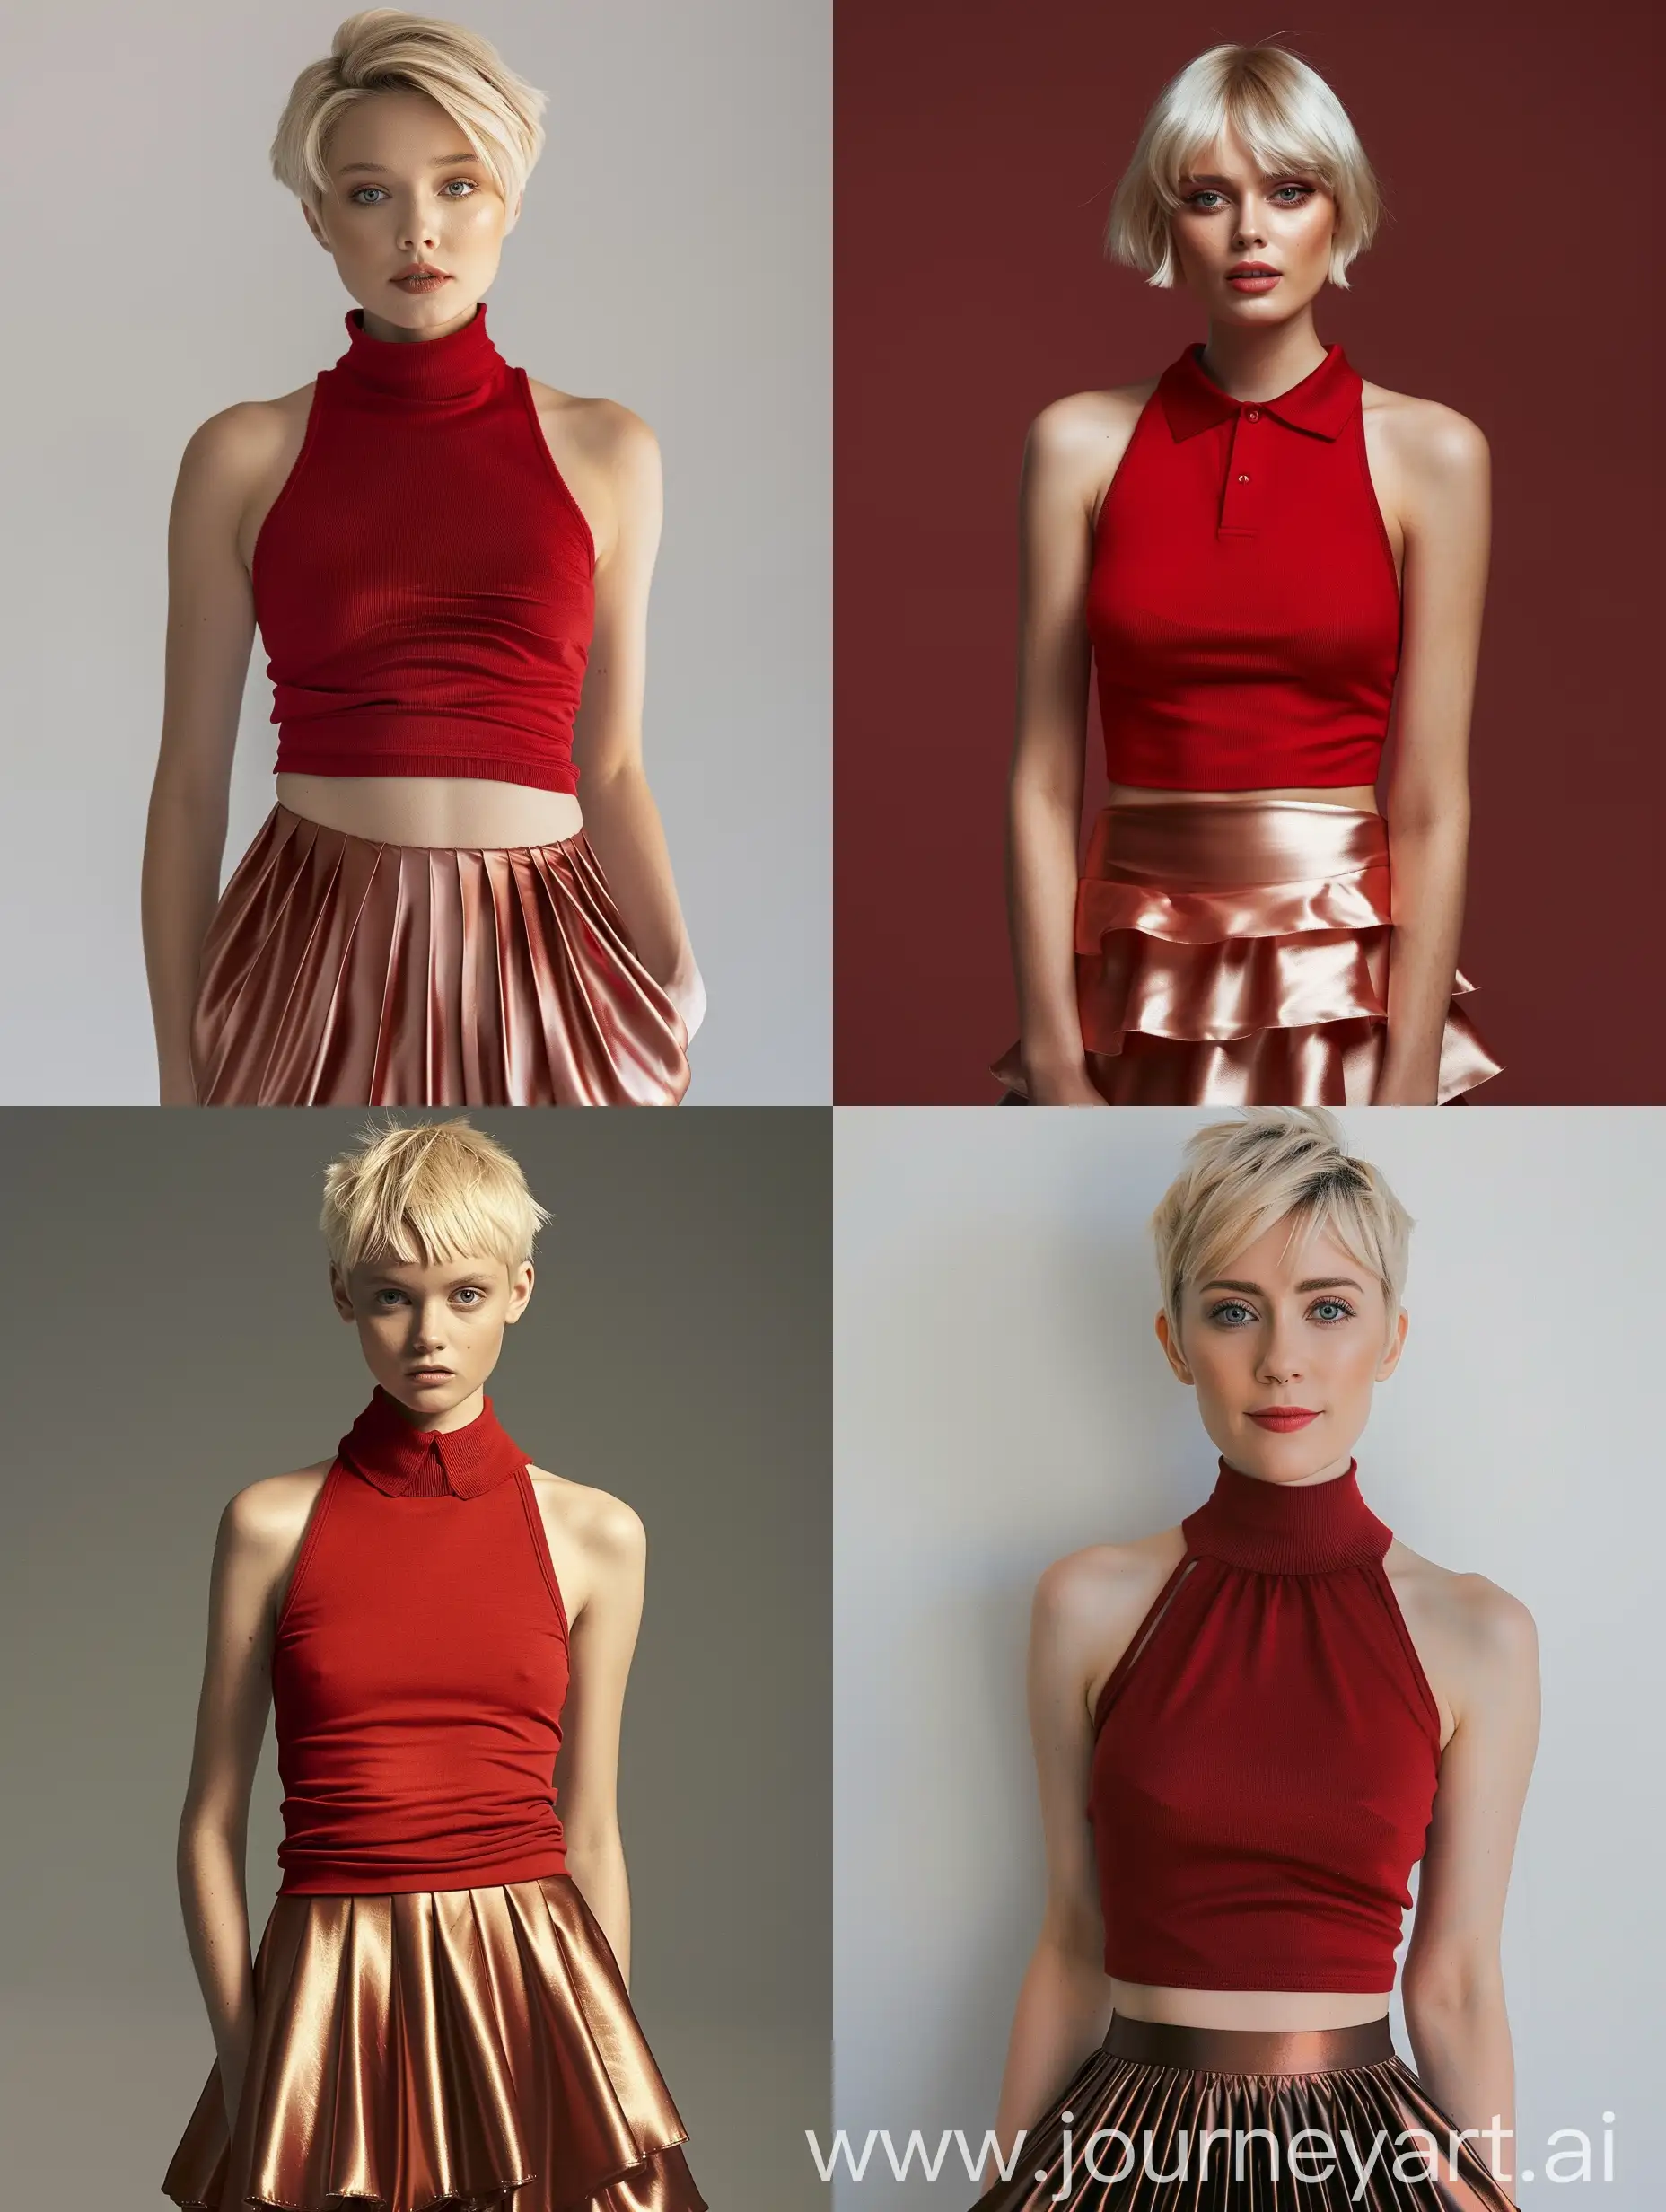 Blond hair woman, short hair, red halter polo
neck,
tall, slim, satin layered mini skirt